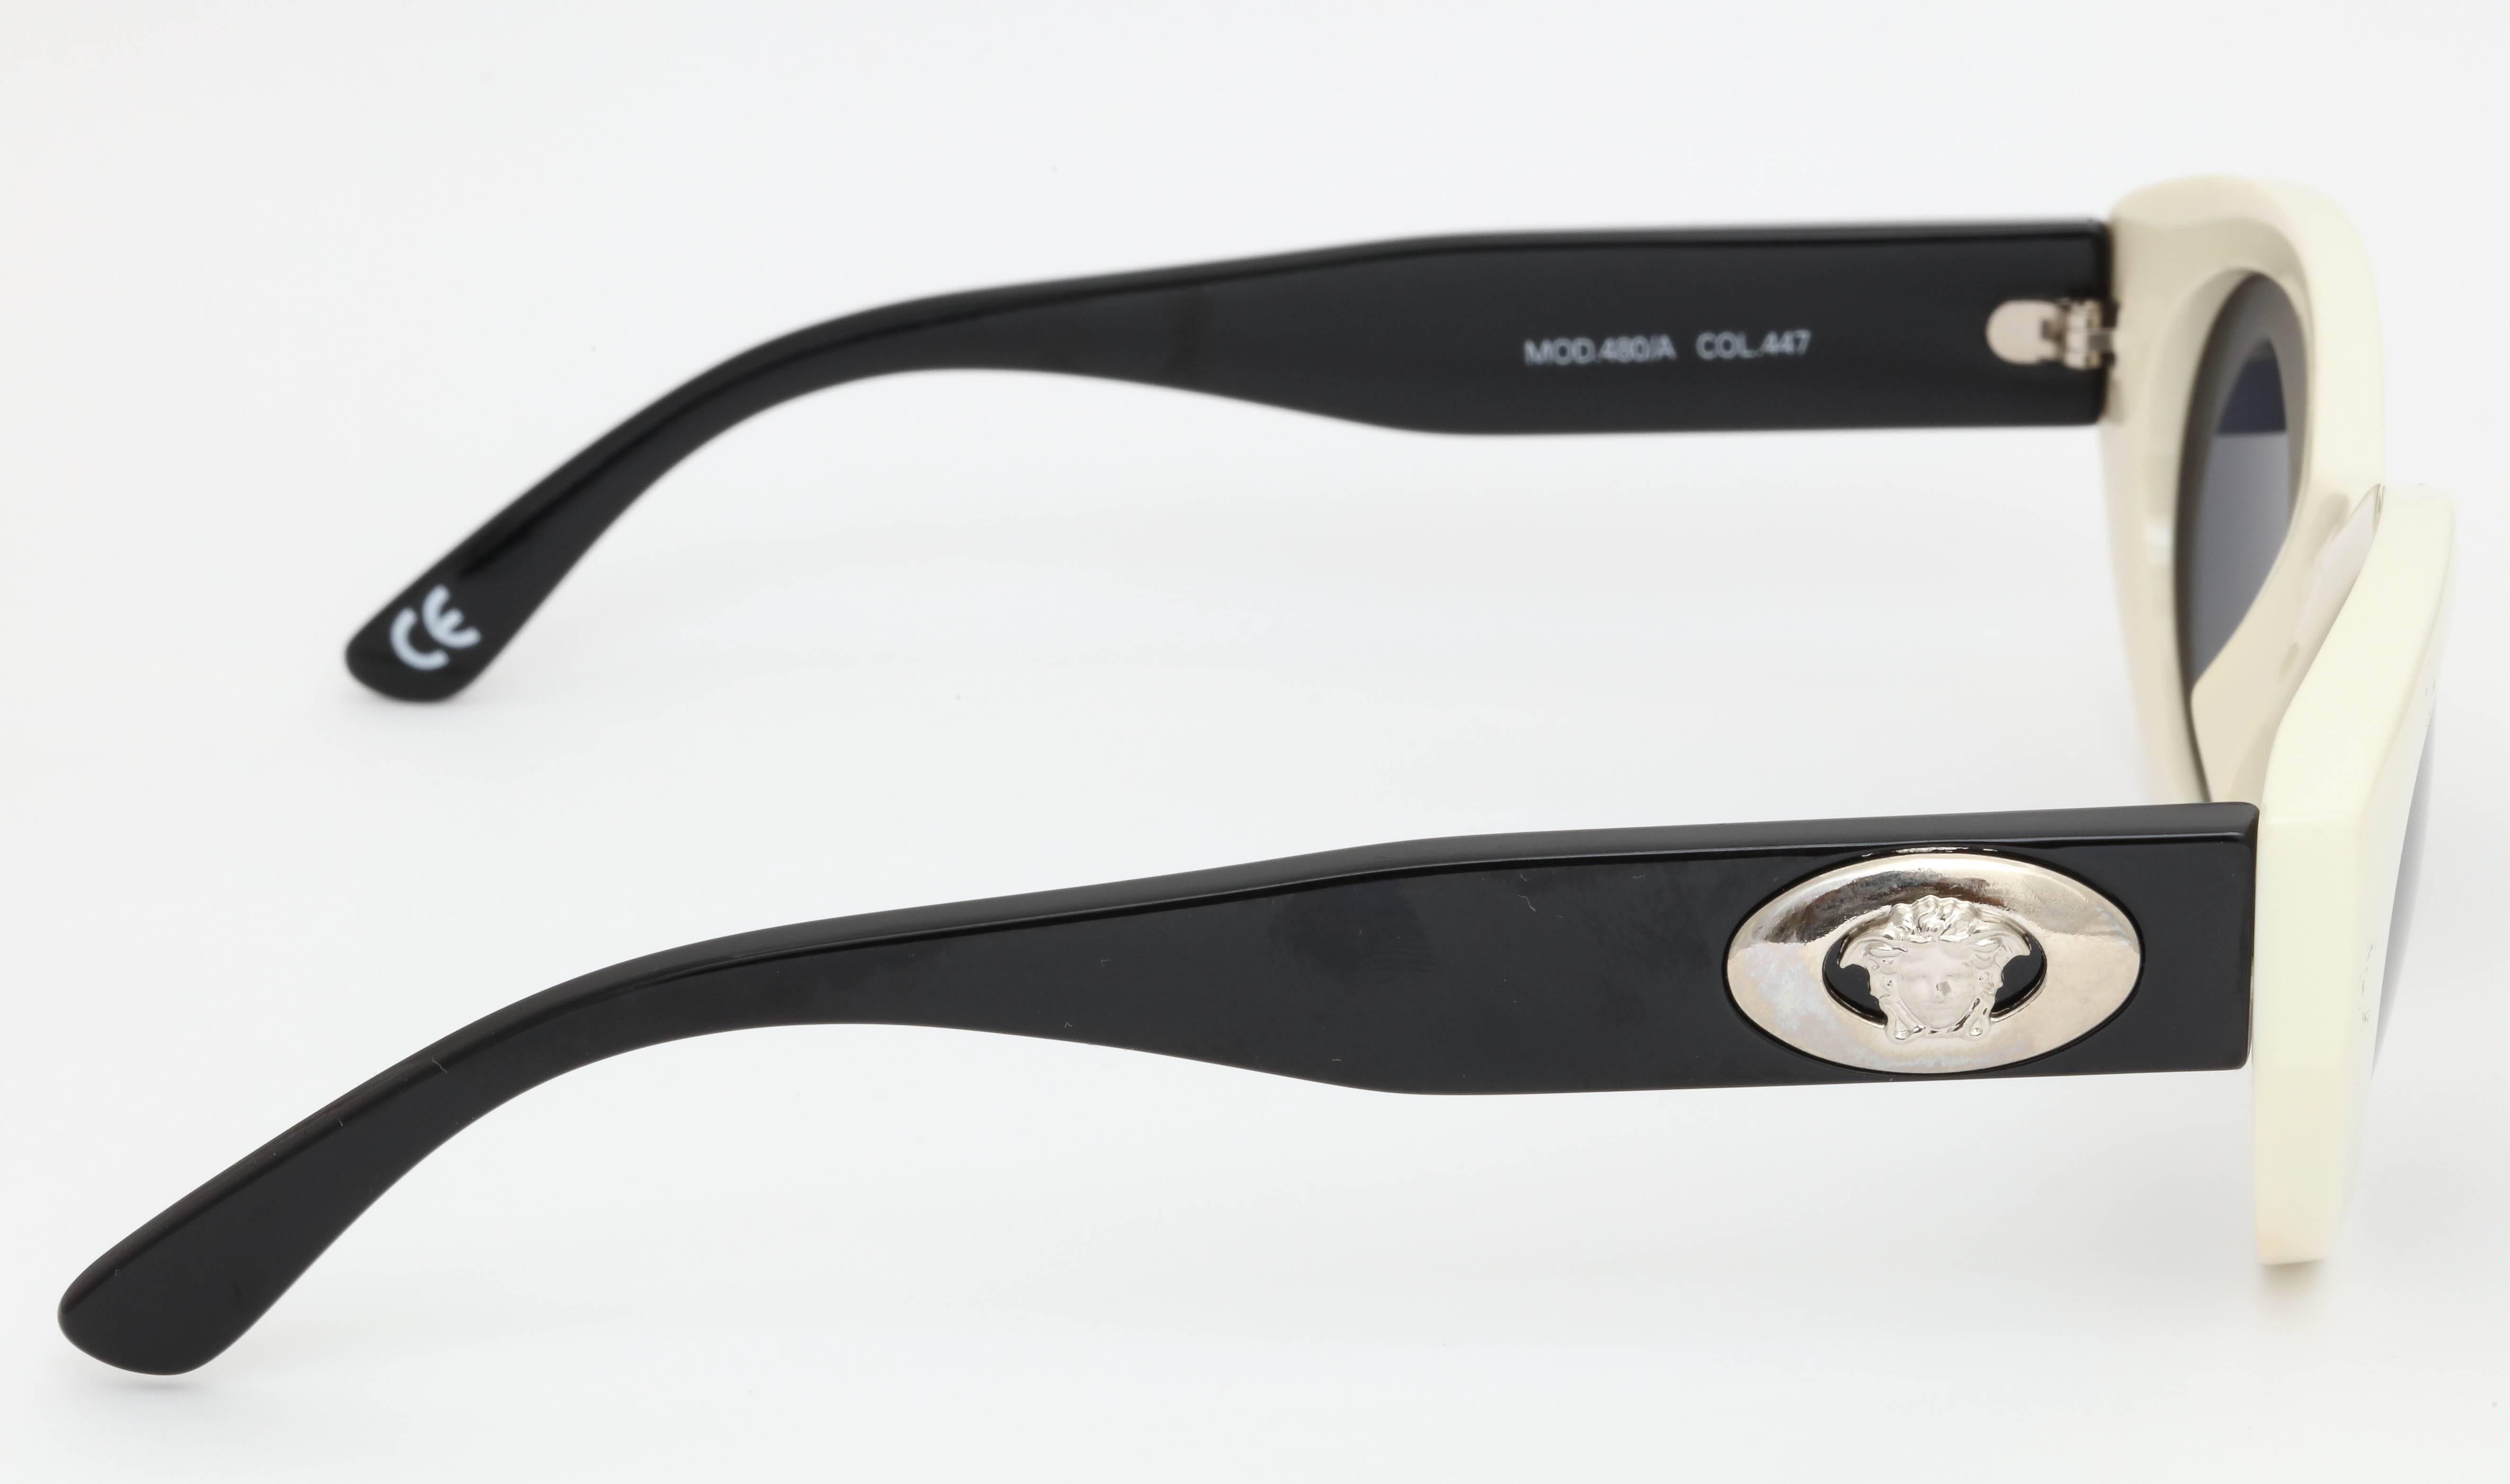 Vintage Gianni Versace Sunglasses Mod 480/A COL 447 1